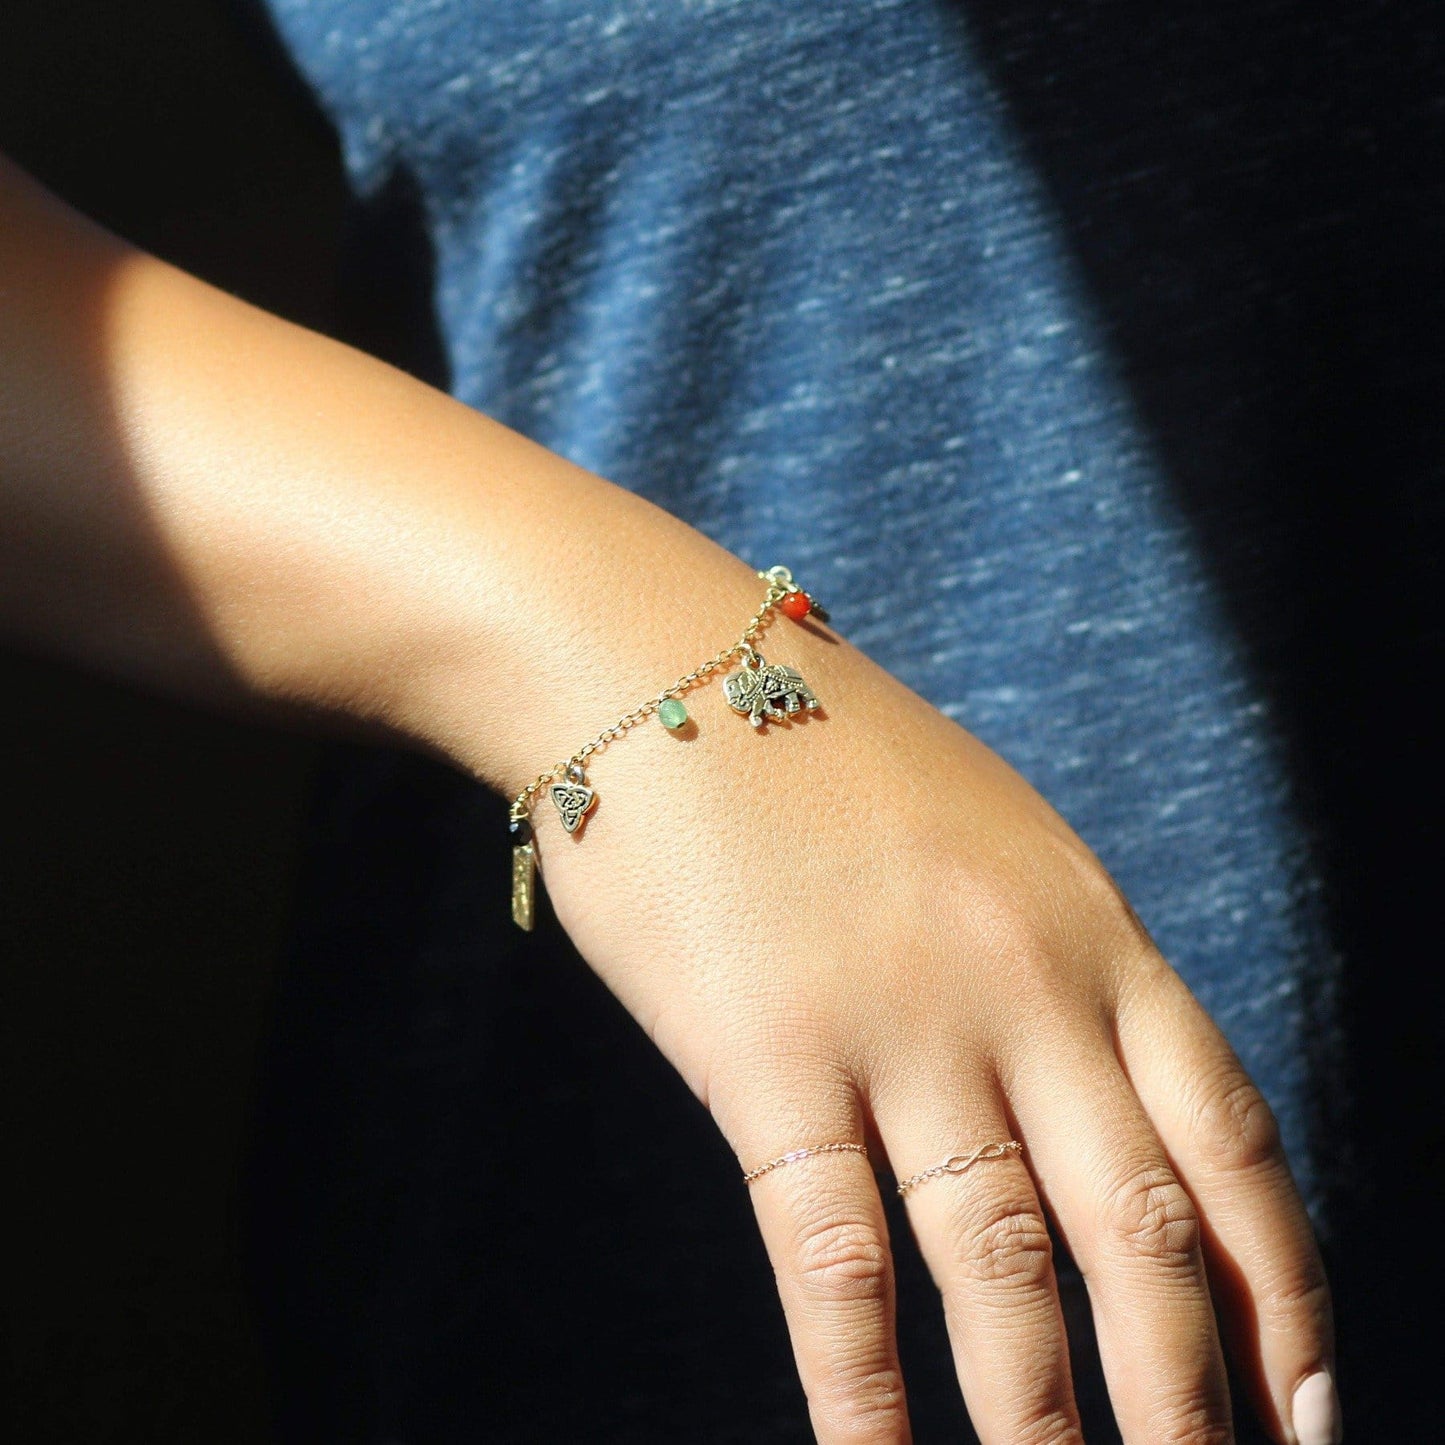 Close up view of MaeMae Super Good Luck Bracelet Charm bracelet on a customer